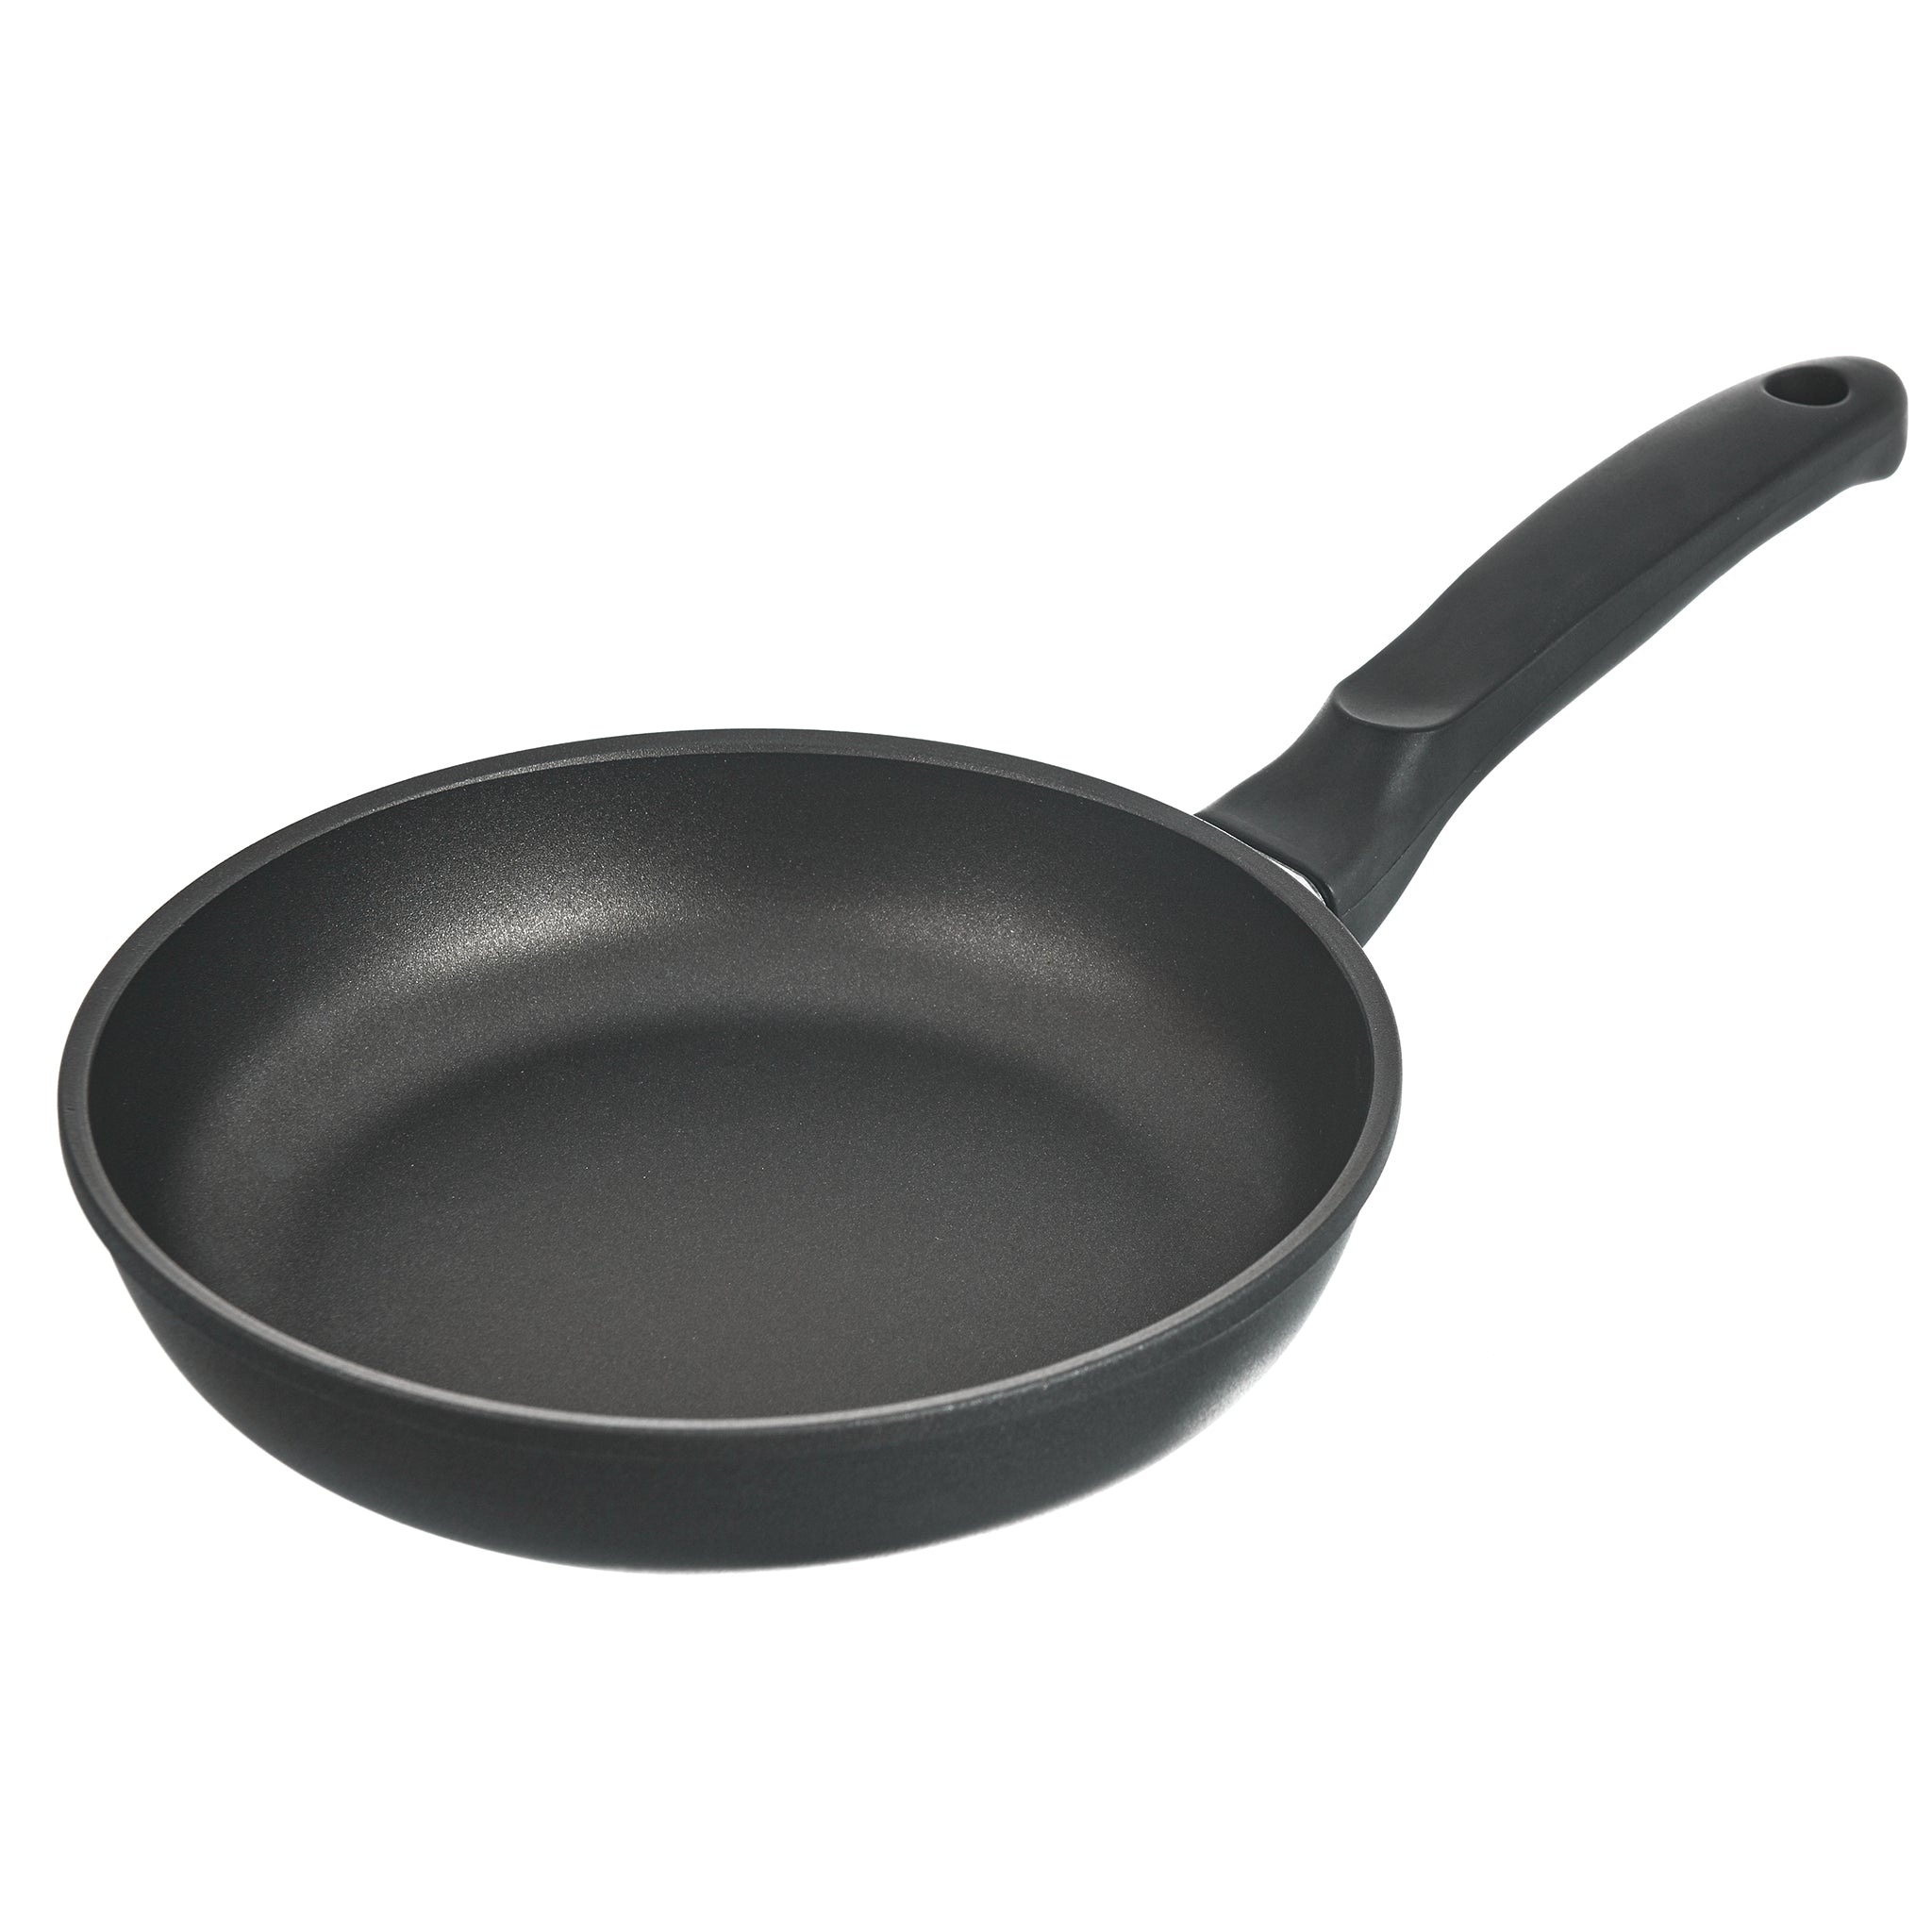 Risoli - Black Fry Pan with Black Handle - 24cm - Black - 44000426